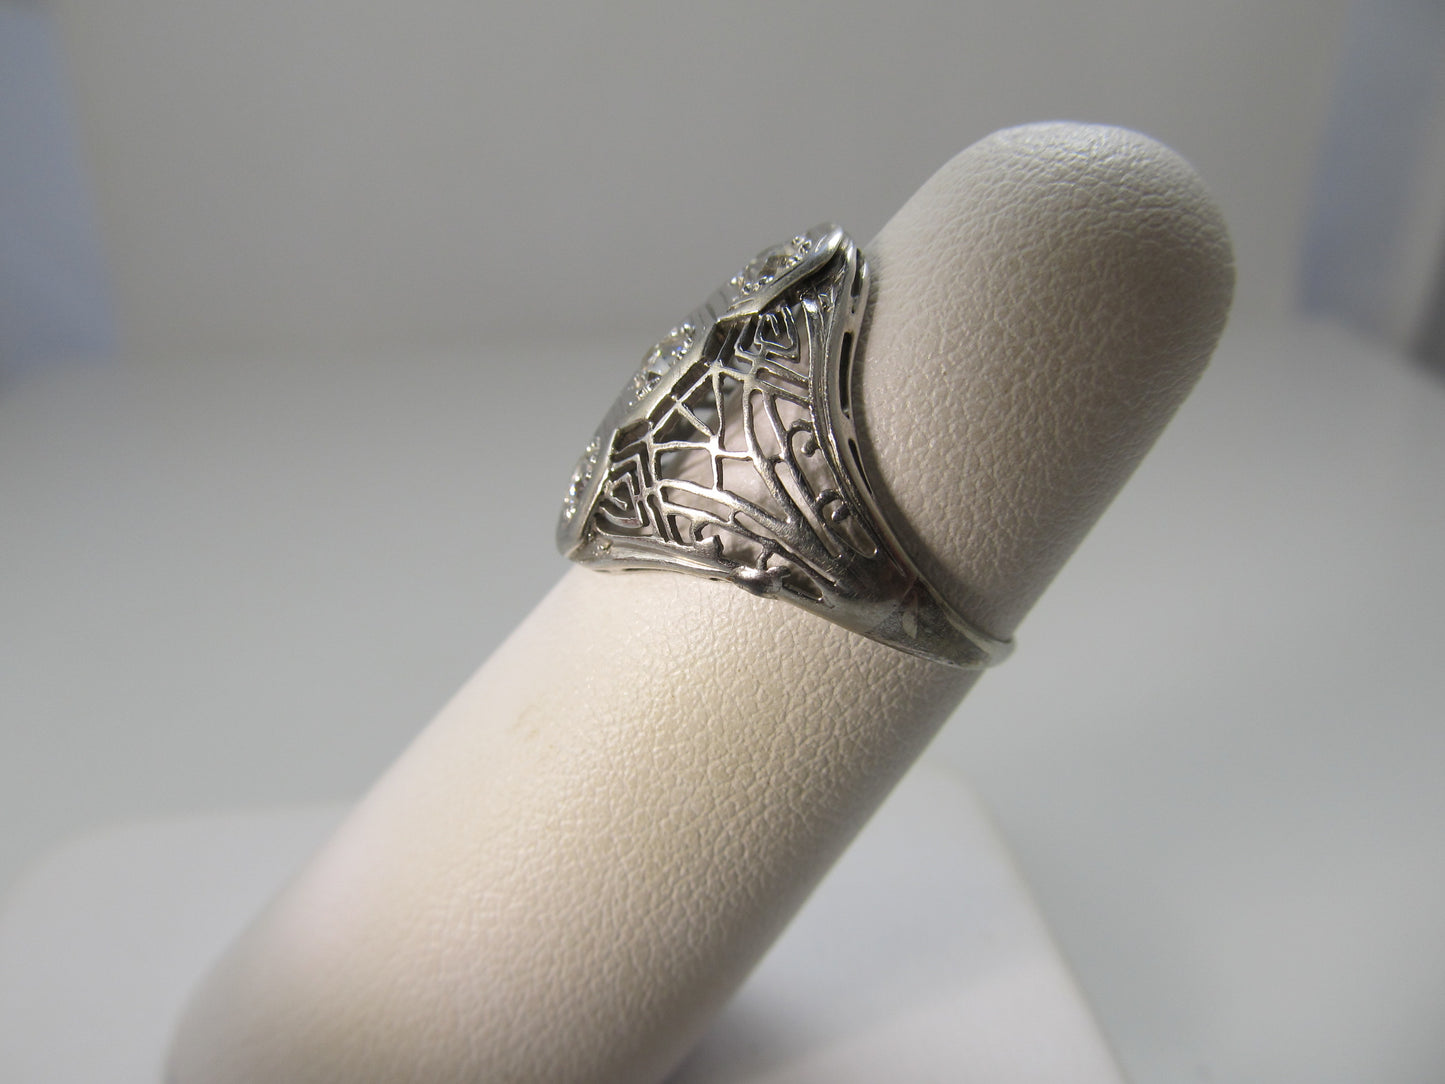 Antique white gold filigree diamond ring